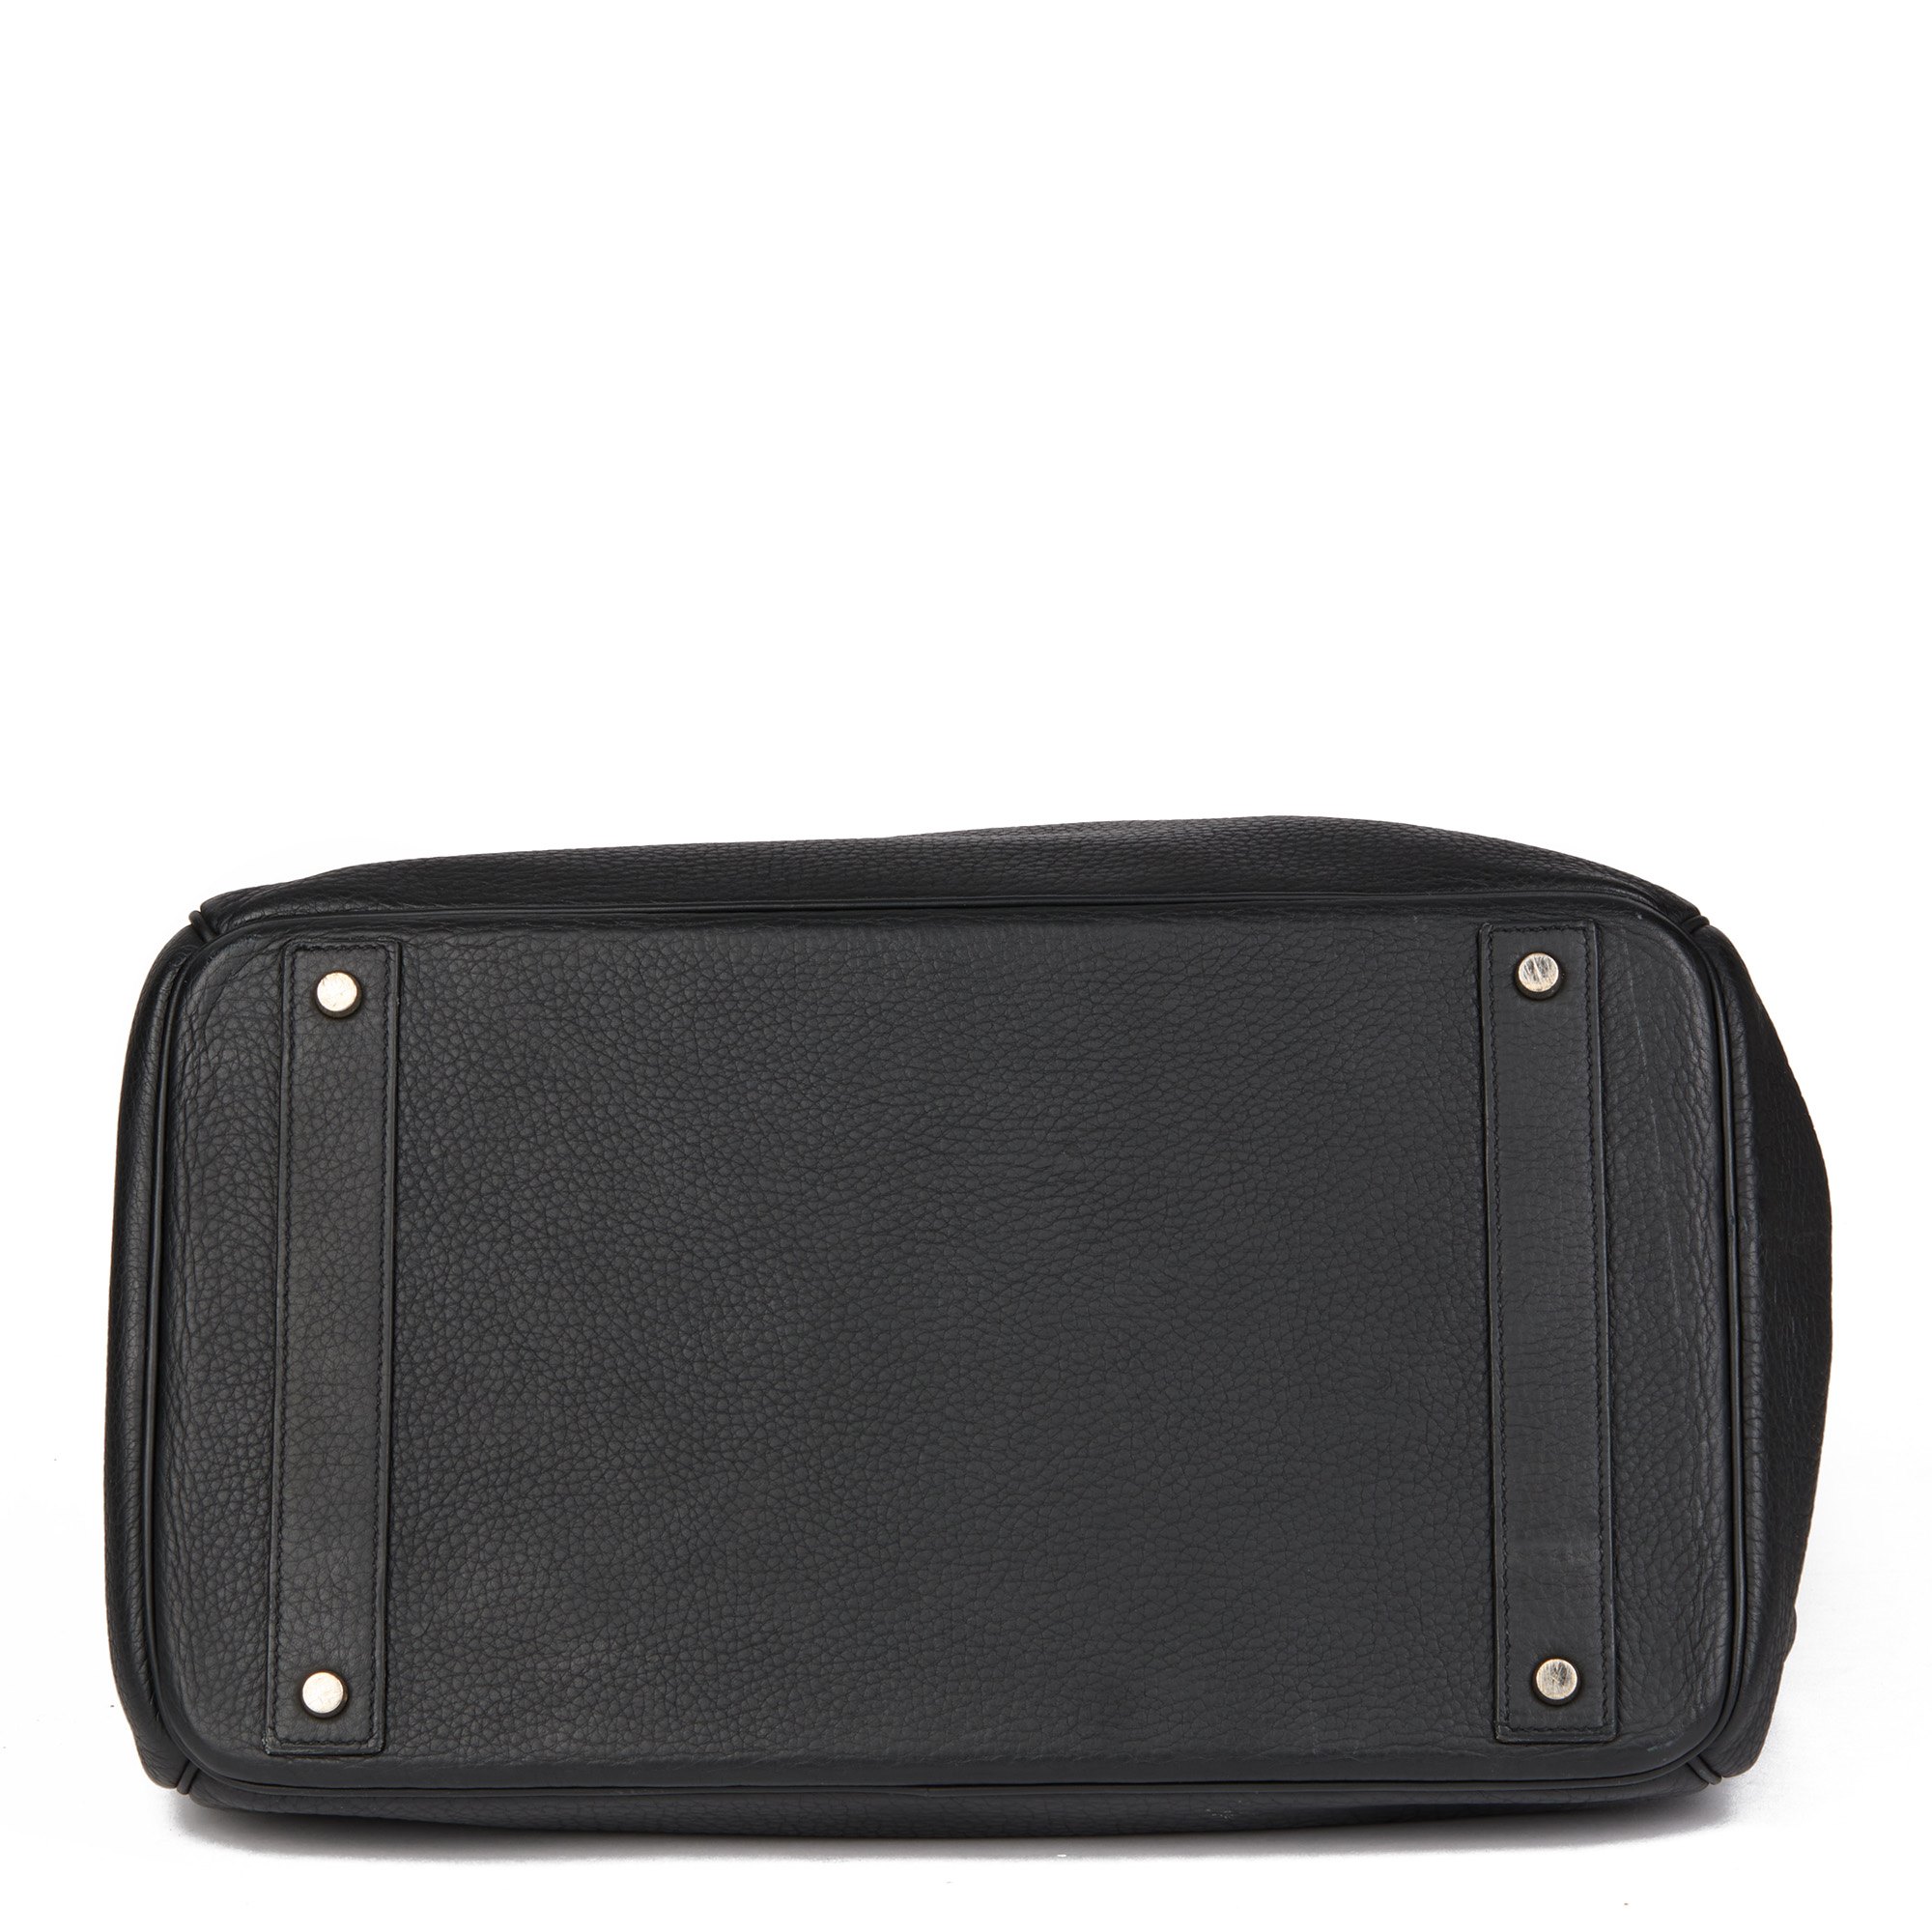 Hermès Black Togo Leather Birkin 40cm HAC